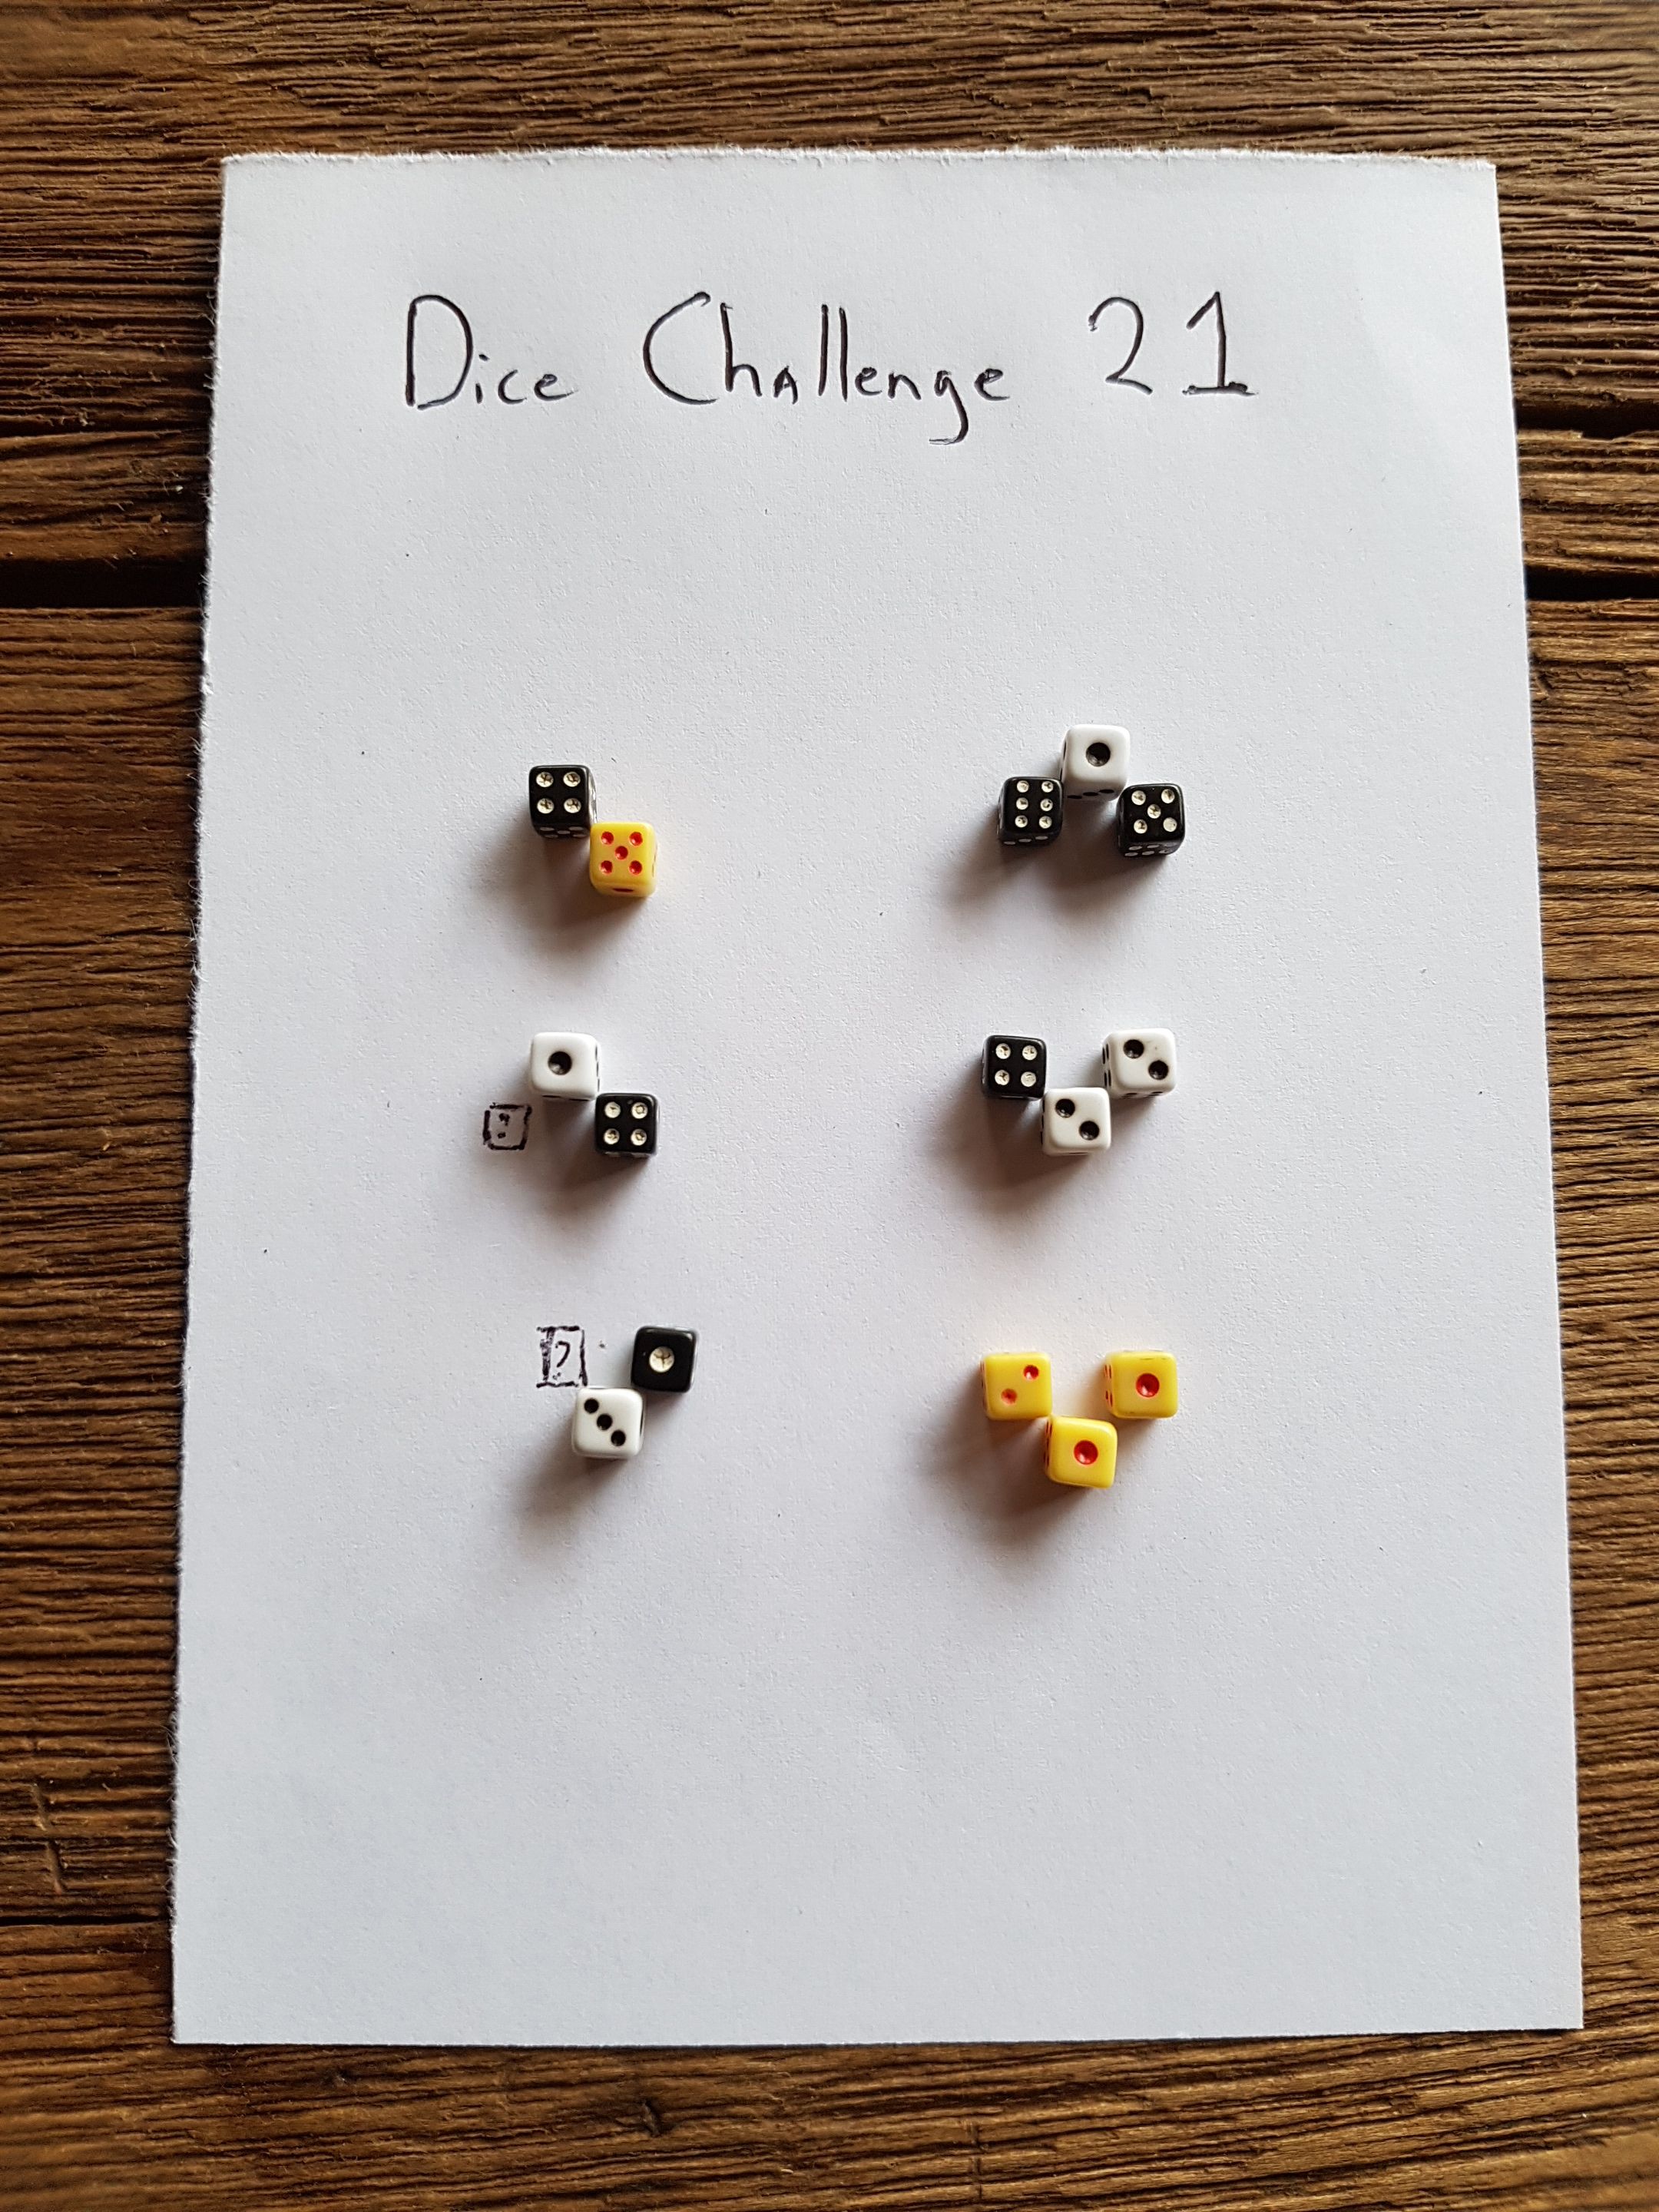 Dice Challenge 21.jpg